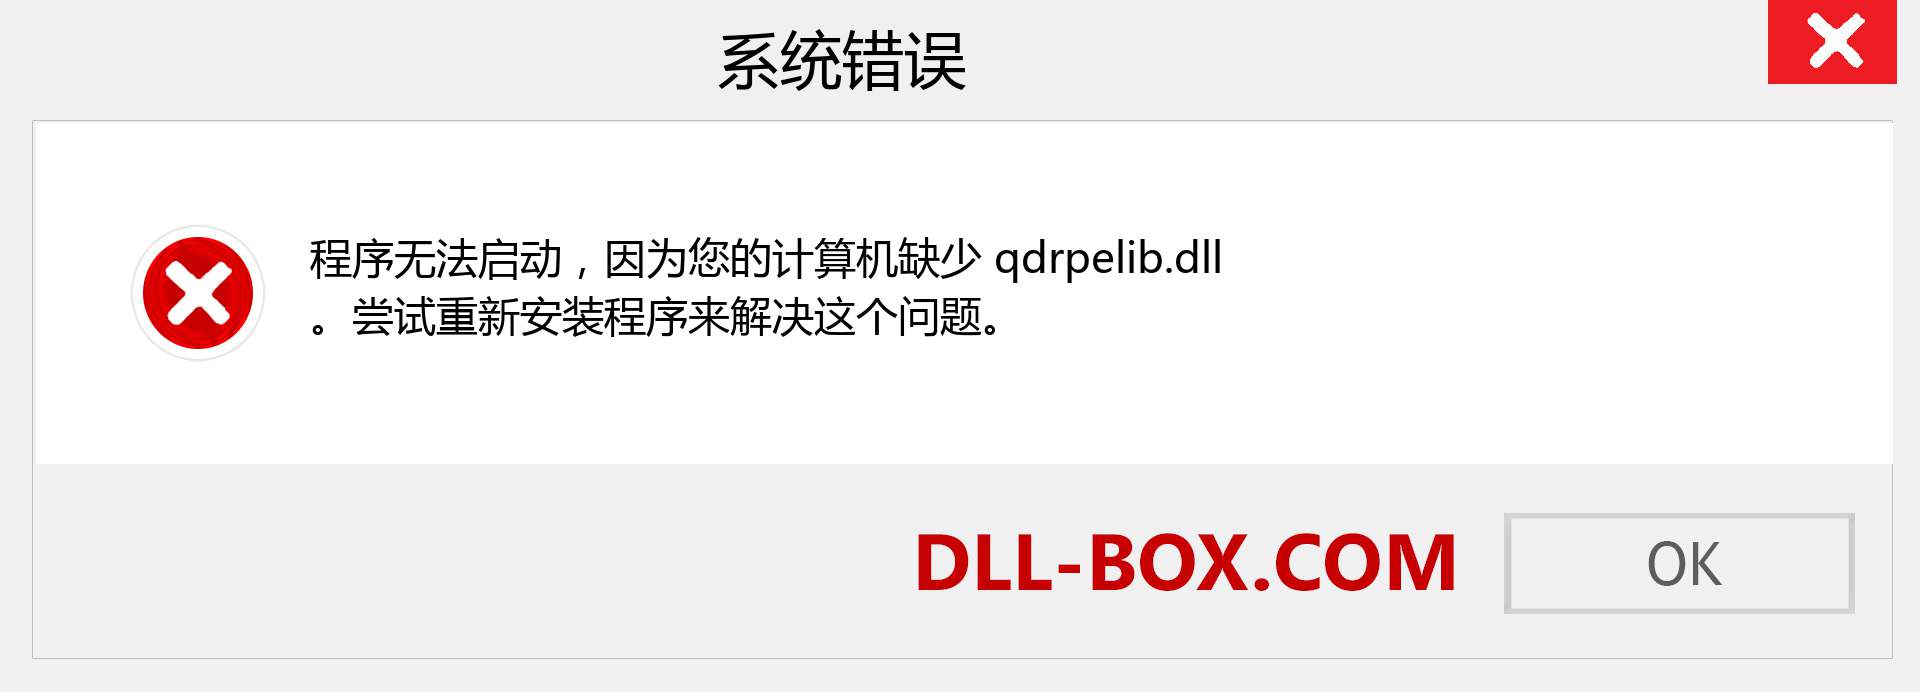 qdrpelib.dll 文件丢失？。 适用于 Windows 7、8、10 的下载 - 修复 Windows、照片、图像上的 qdrpelib dll 丢失错误